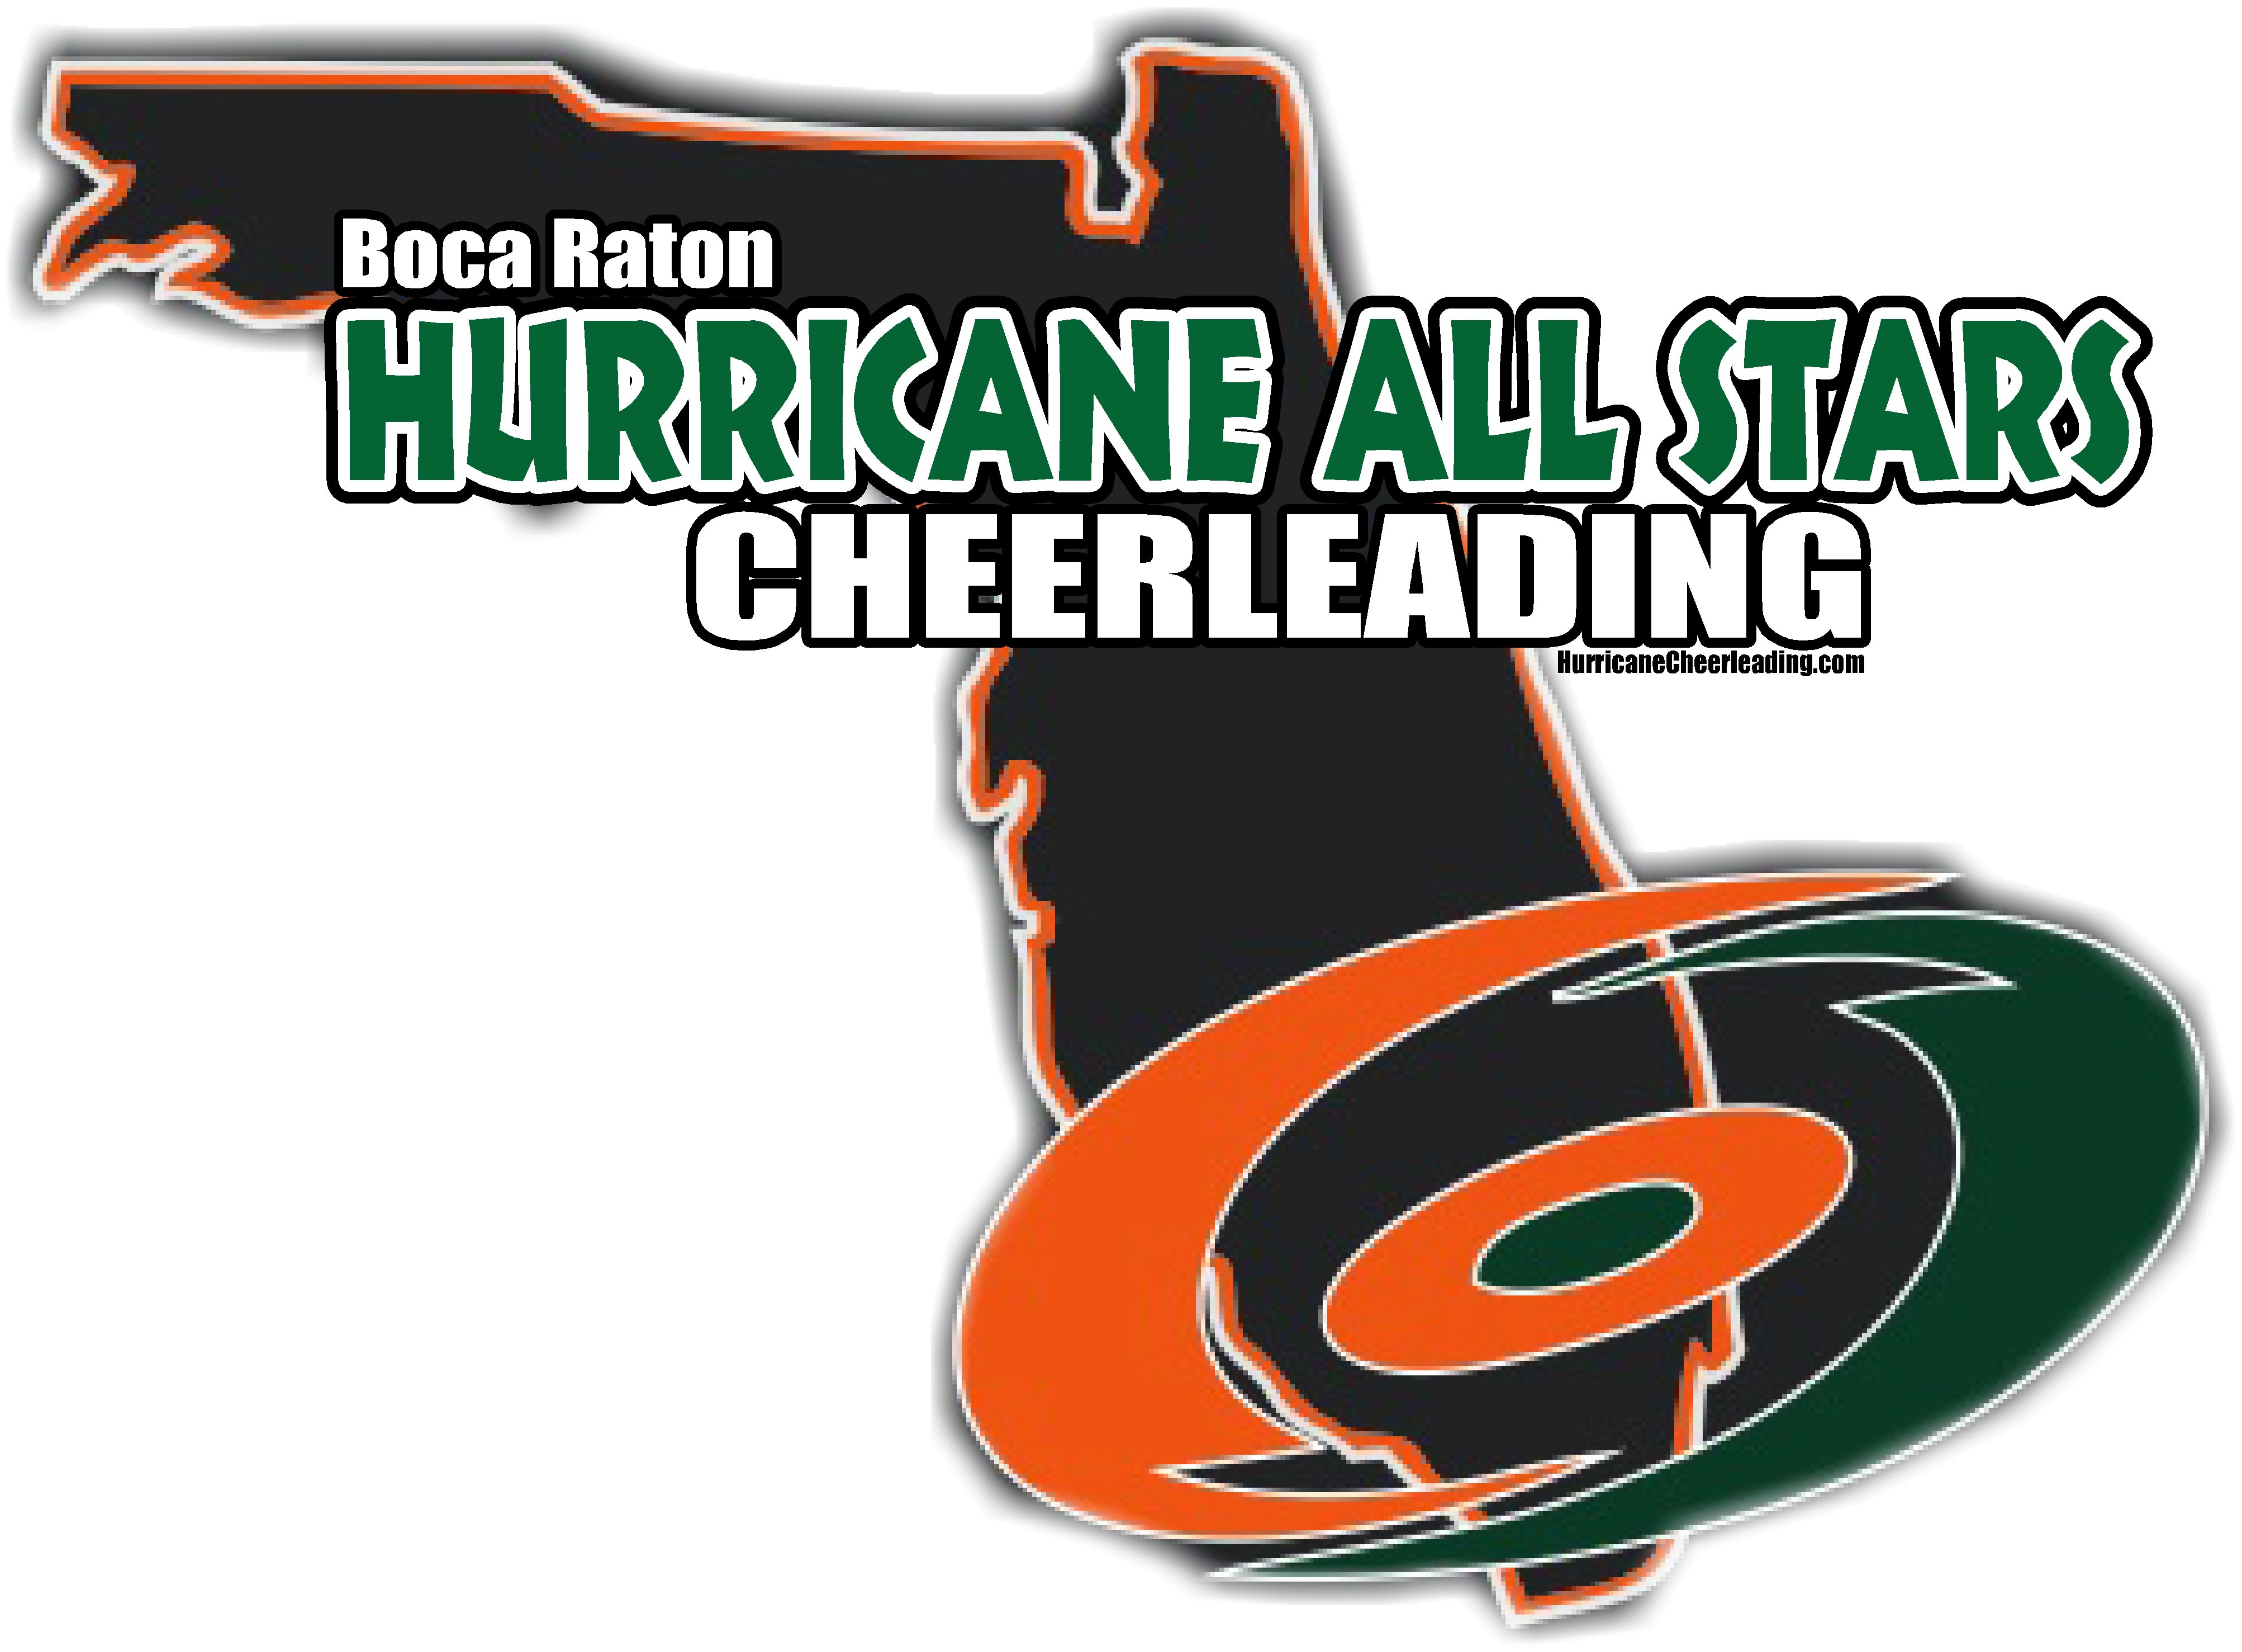 Boca Raton Hurricane Allstar Cheerleading